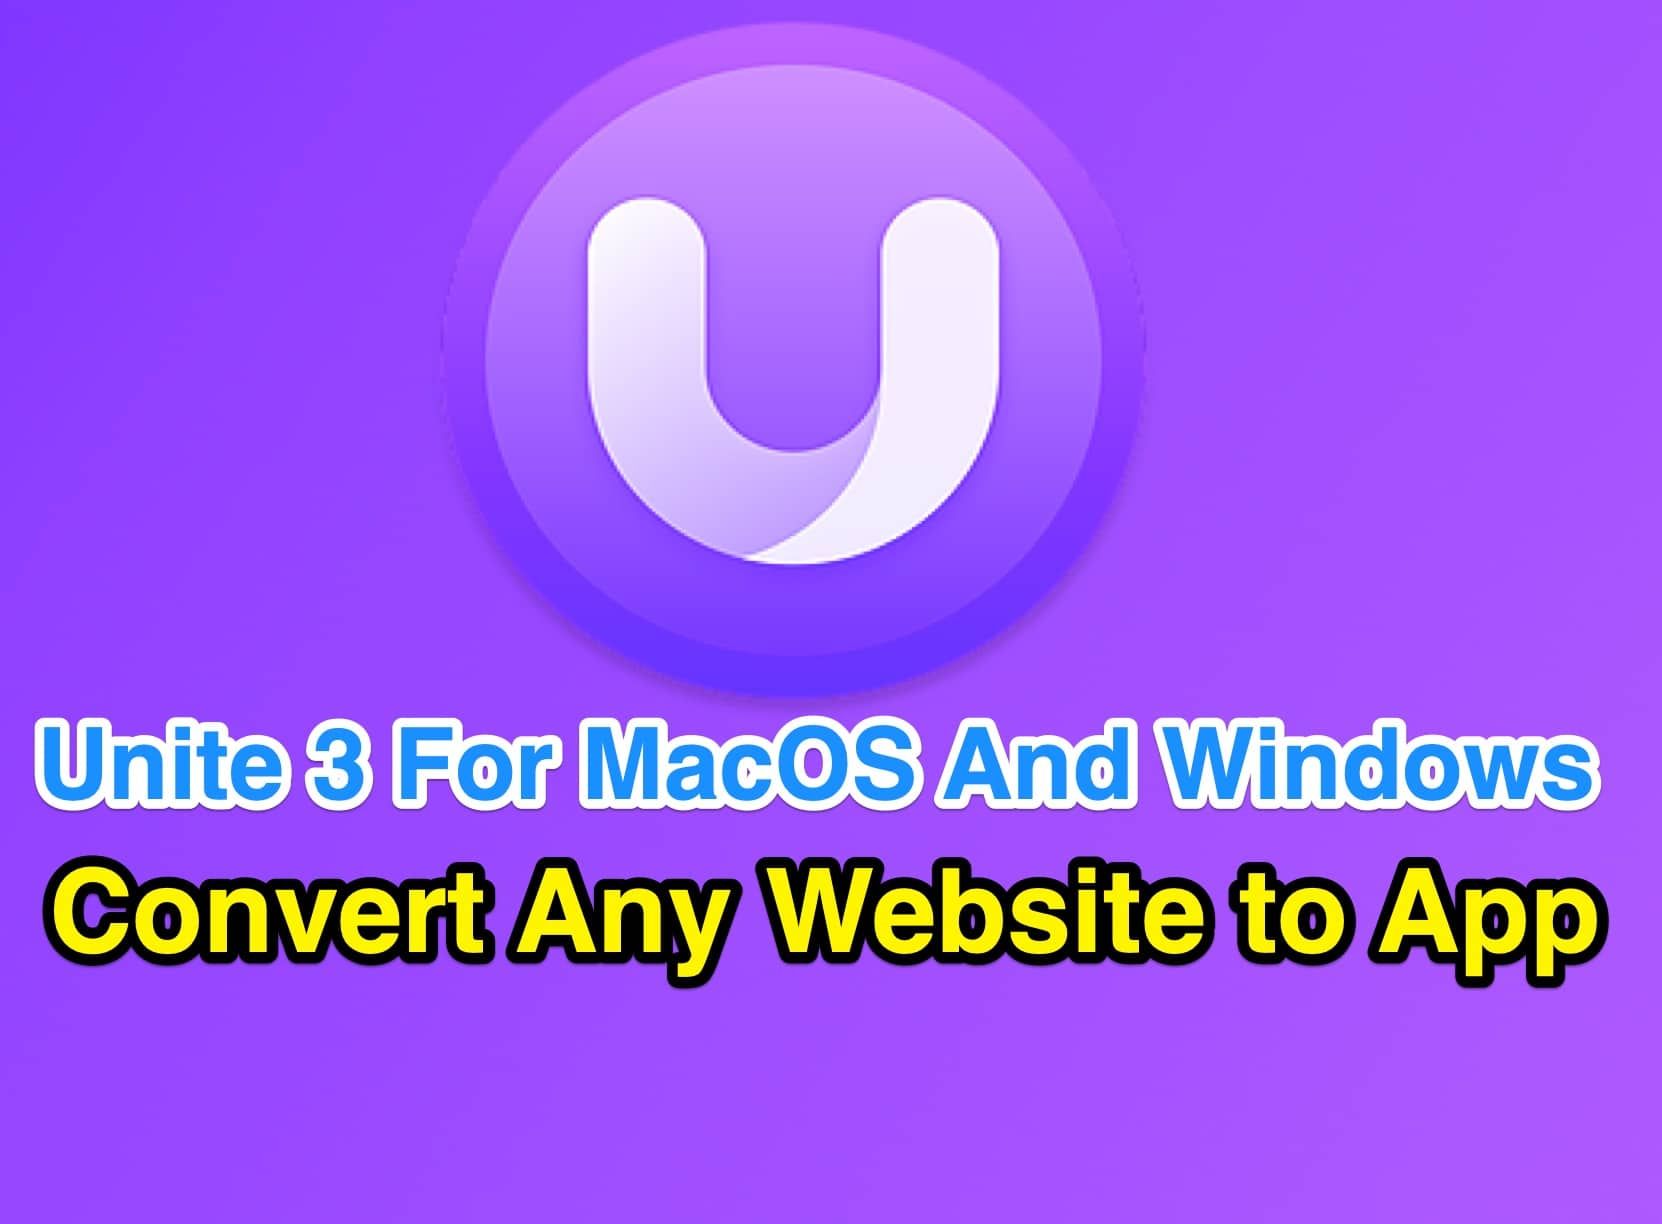 Unite App Websites Macos